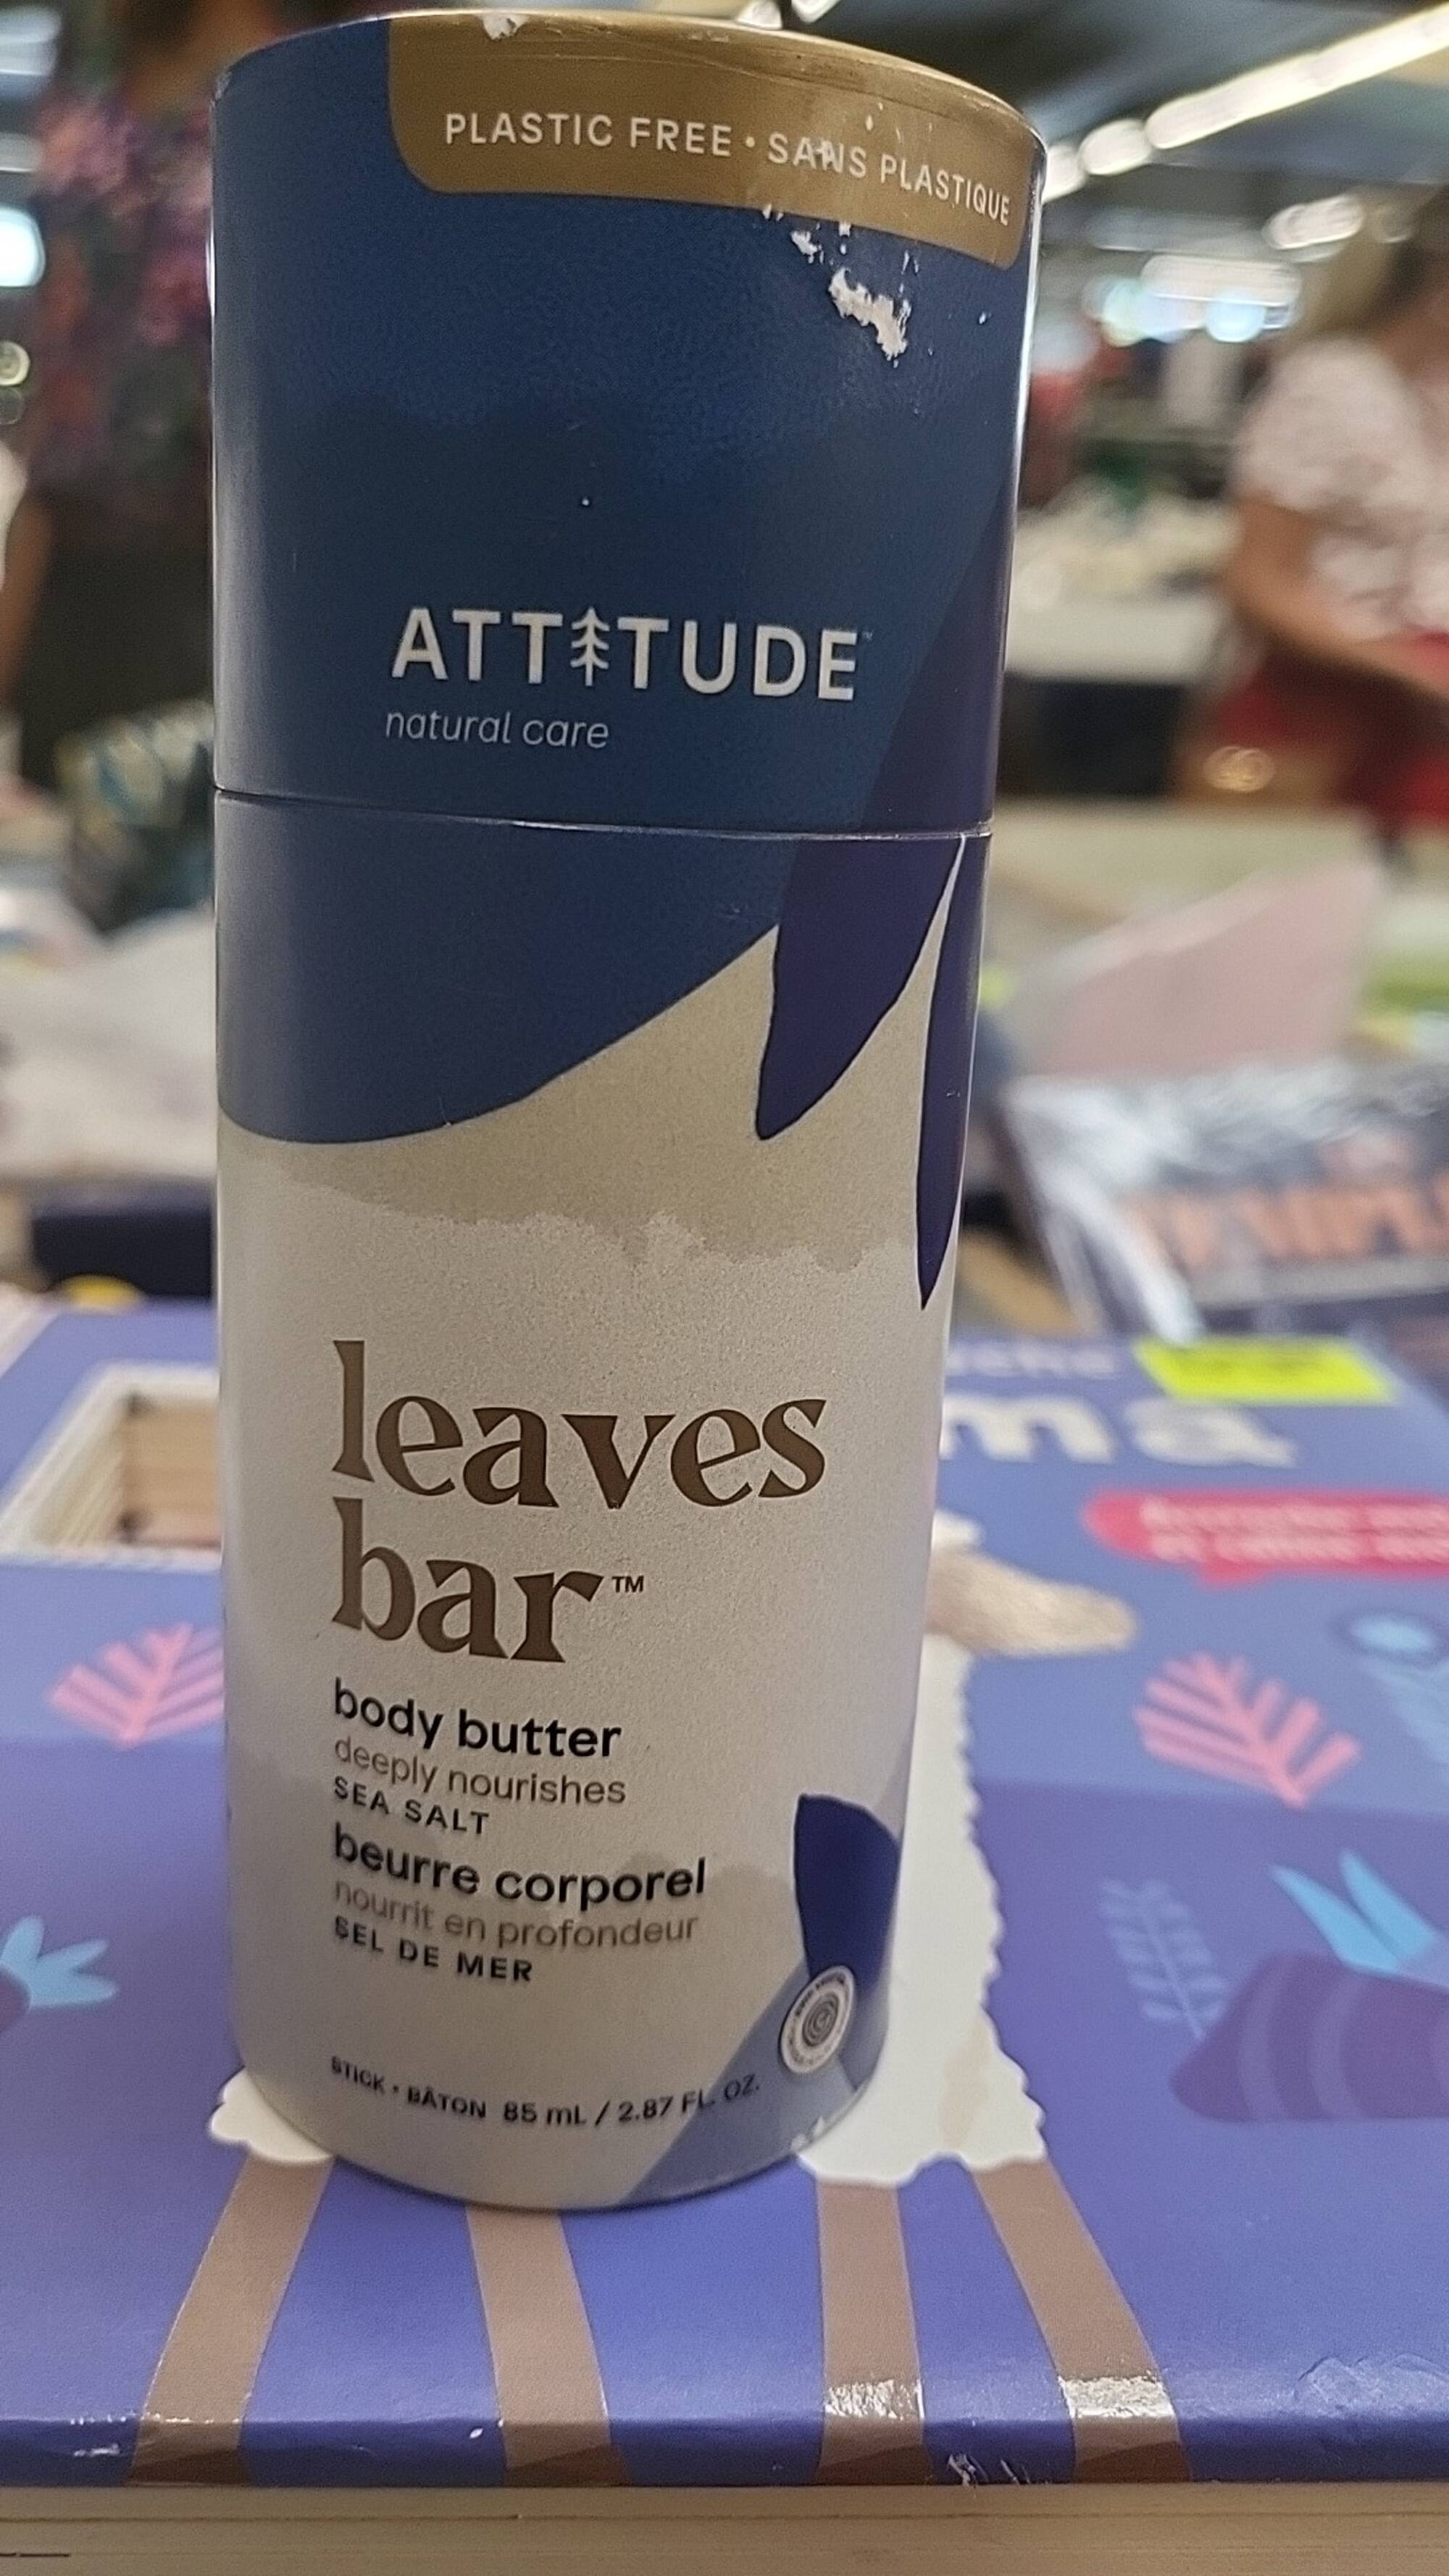 ATTITUDE - Leaves bar - Beurre corporel